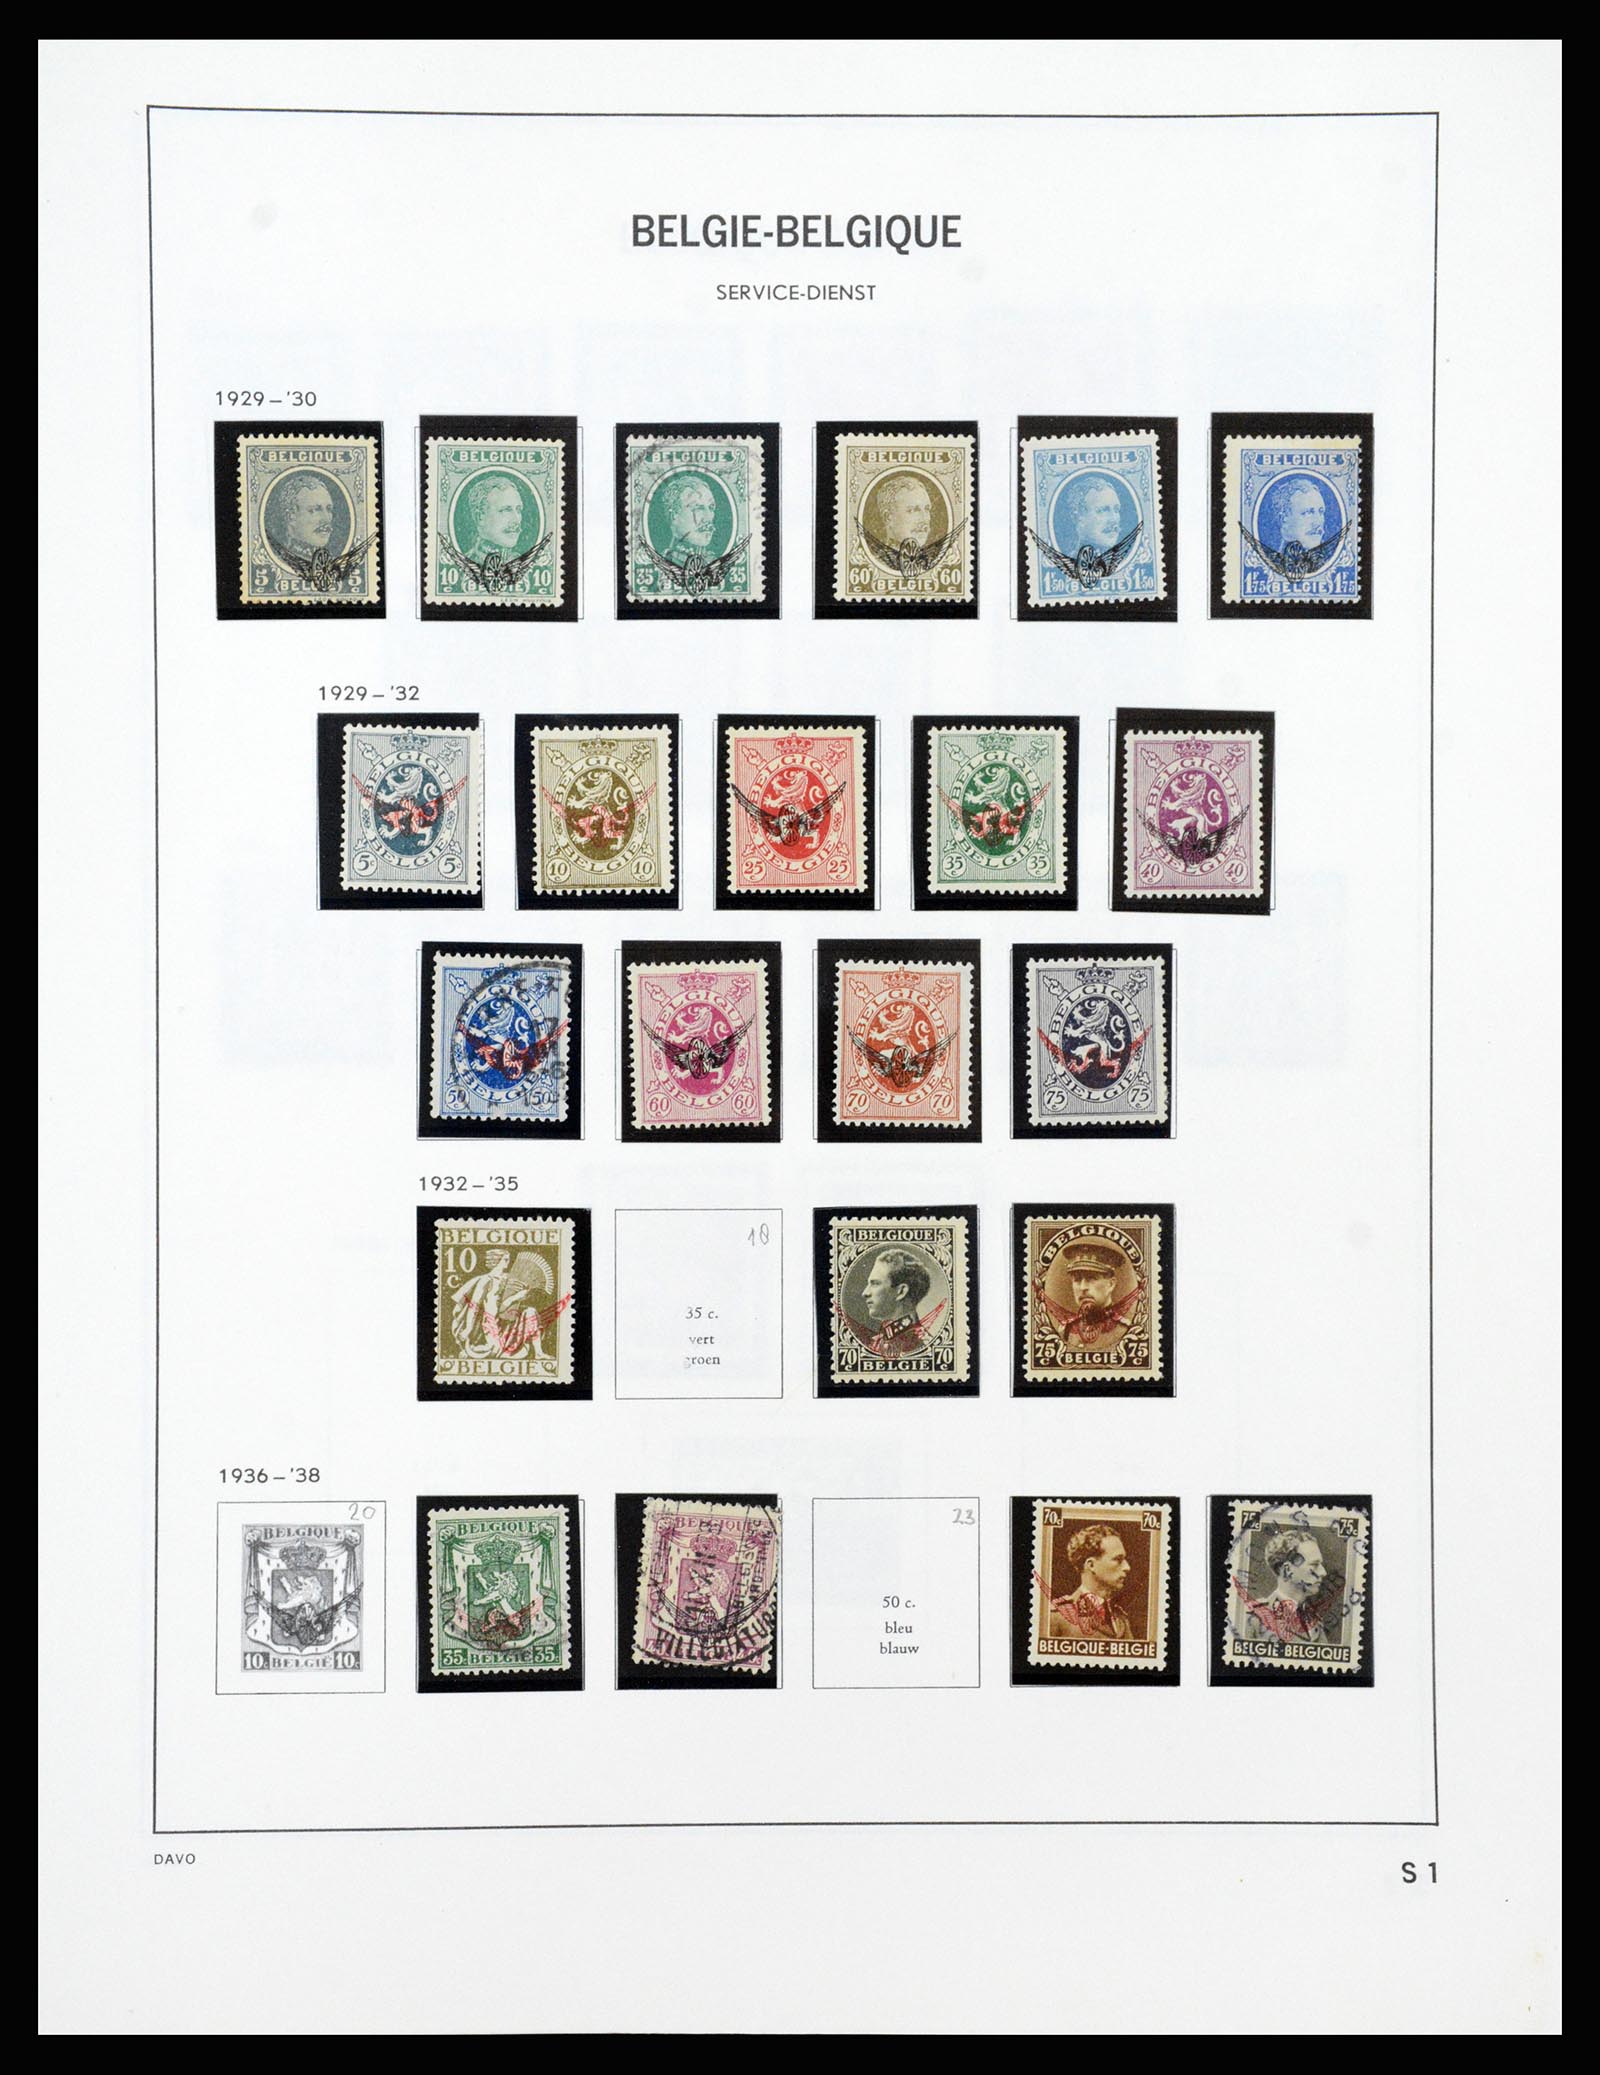 37189 477 - Stamp collection 37189 Belgium 1849-2006.